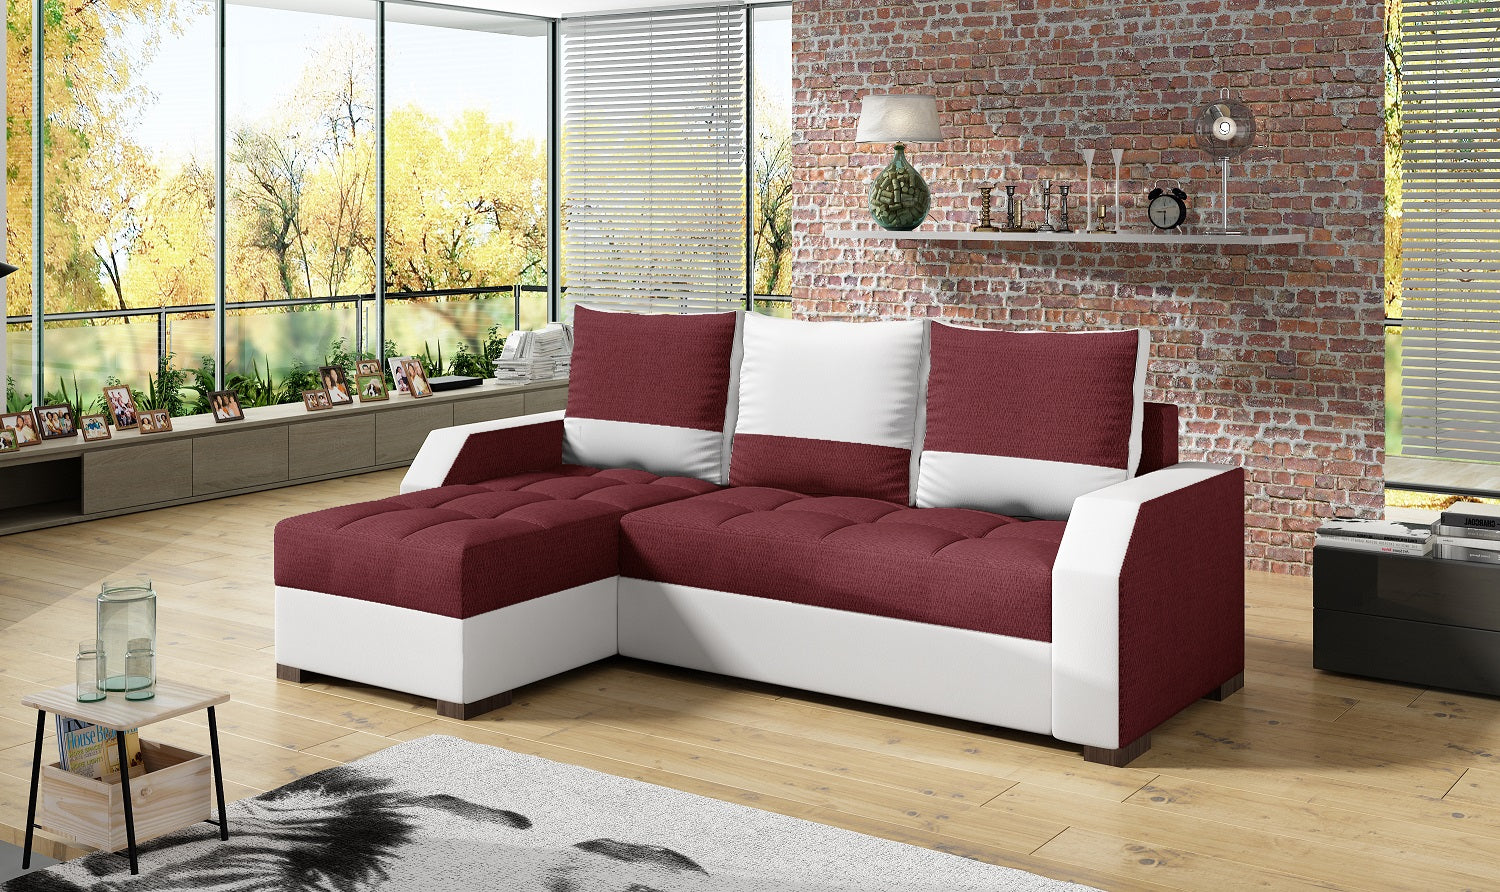 Rinconera Sofa Bed Model Aris Free